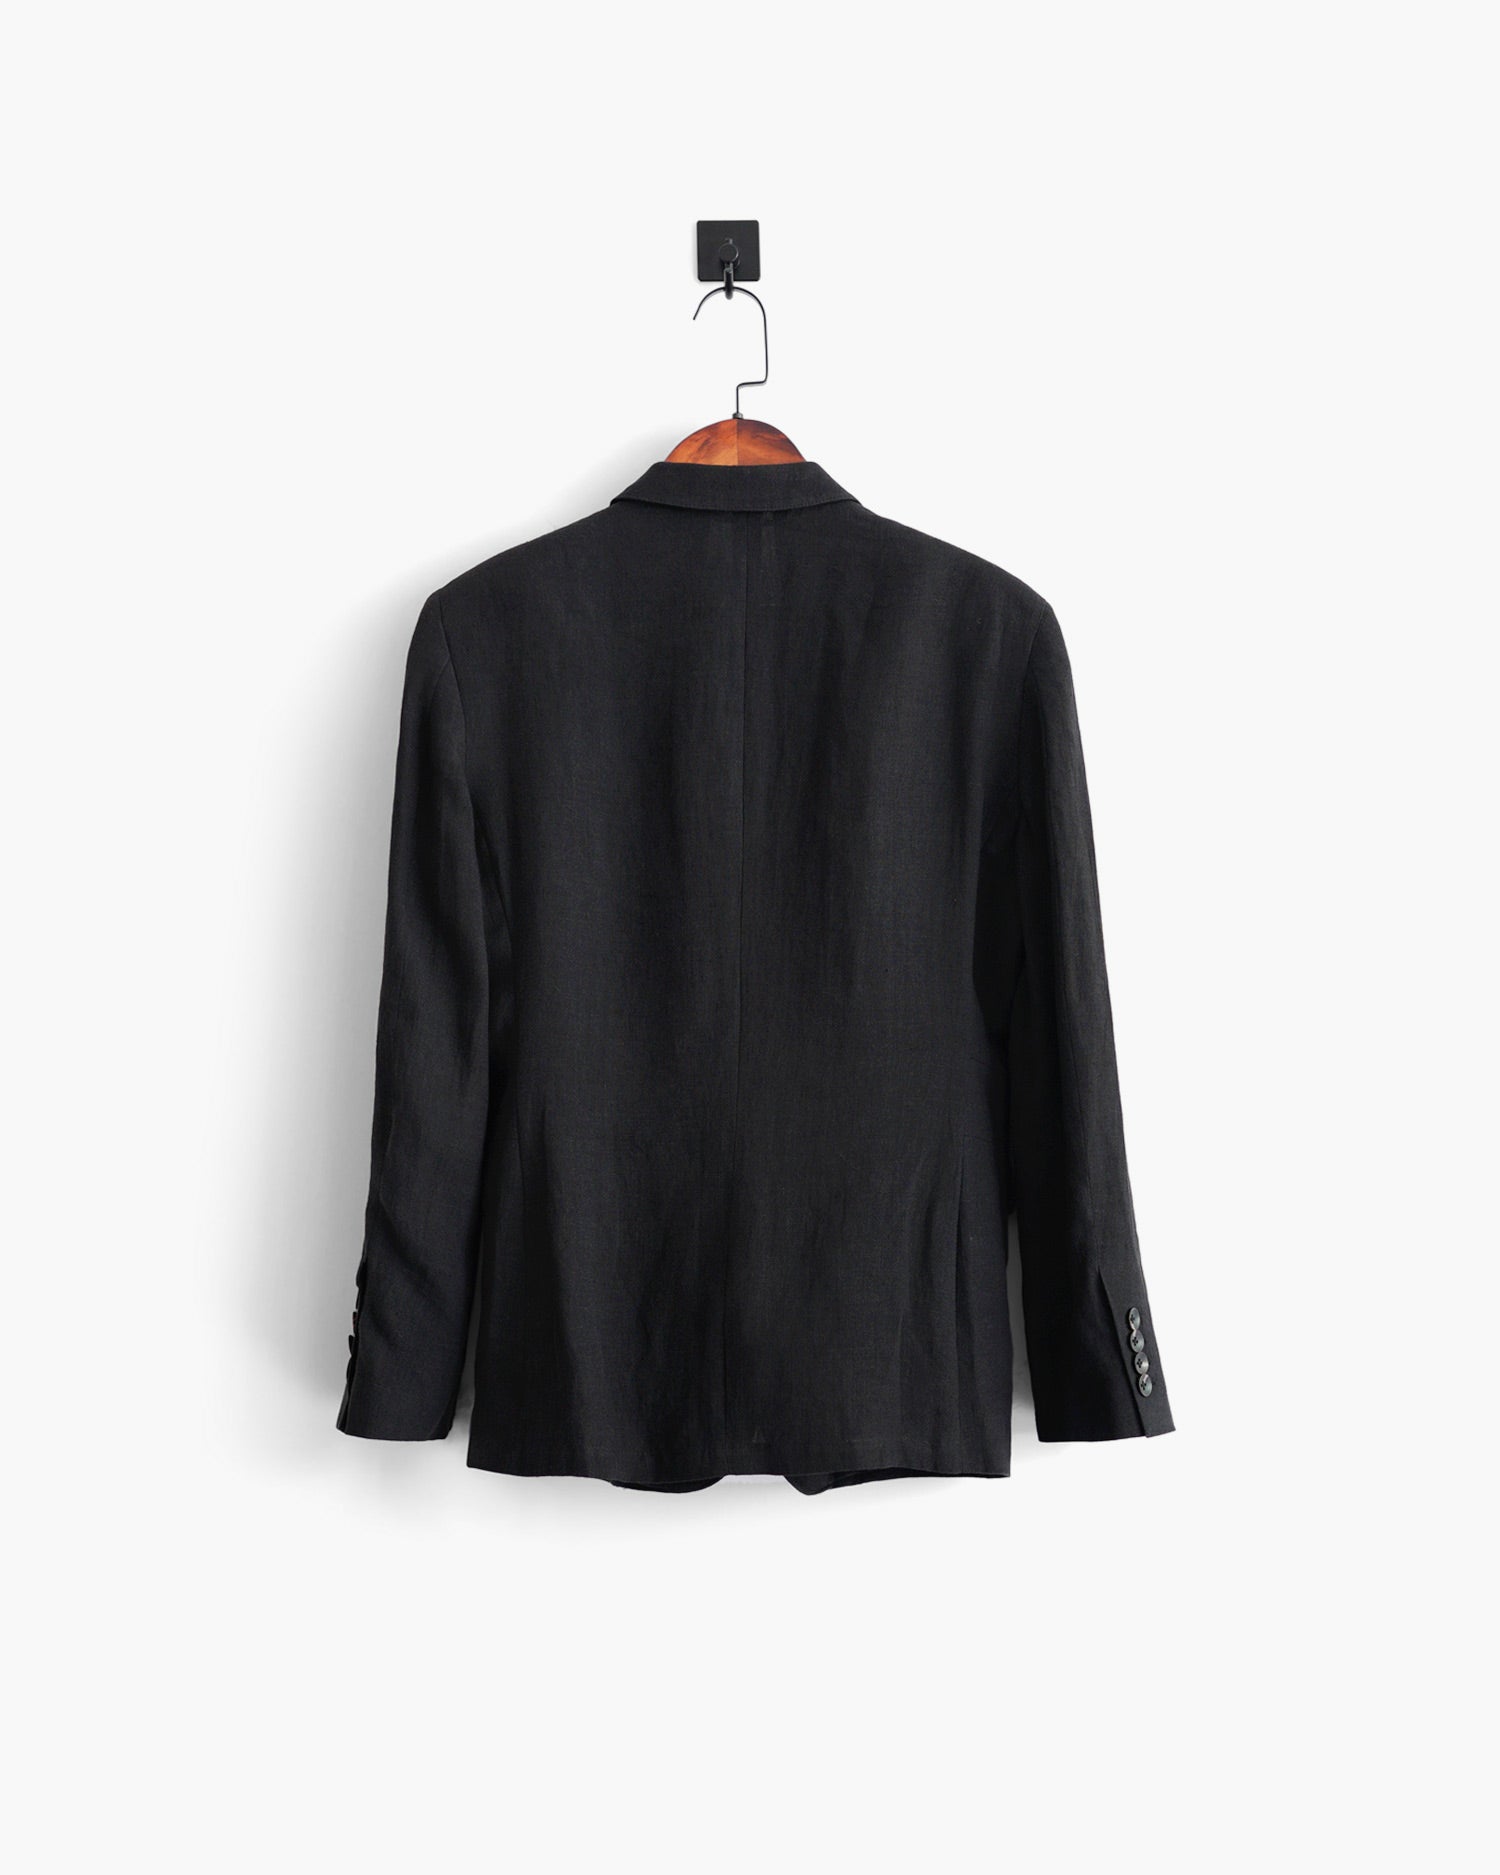 ROSEN-S Daily Suit Jacket - Black Linen